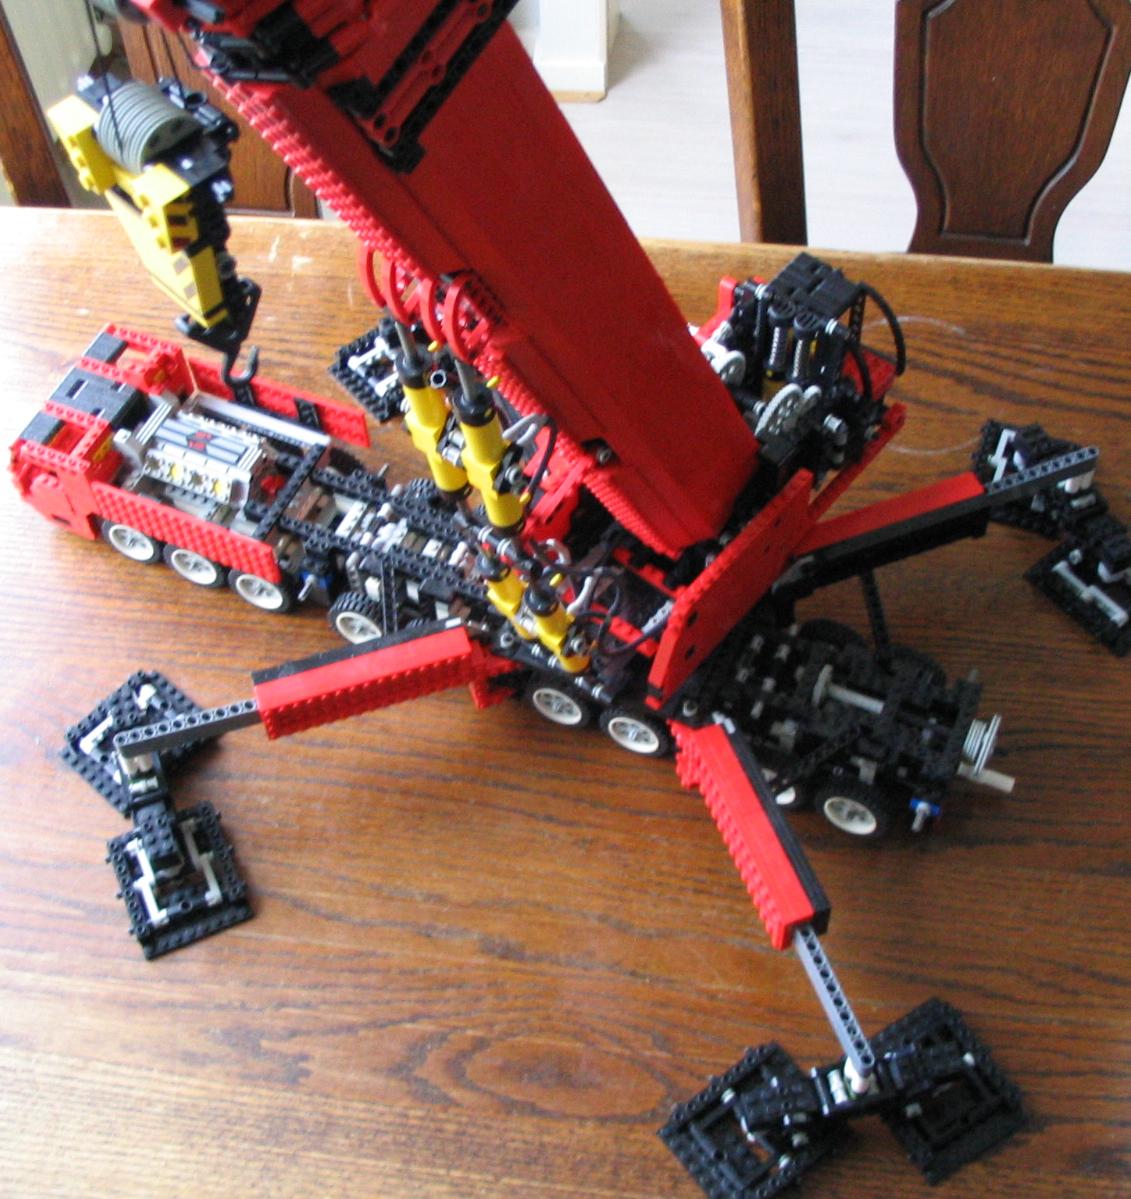 Erik Leppen's Demag AC700 9-Axle Mobile Crane - LEGO Technic